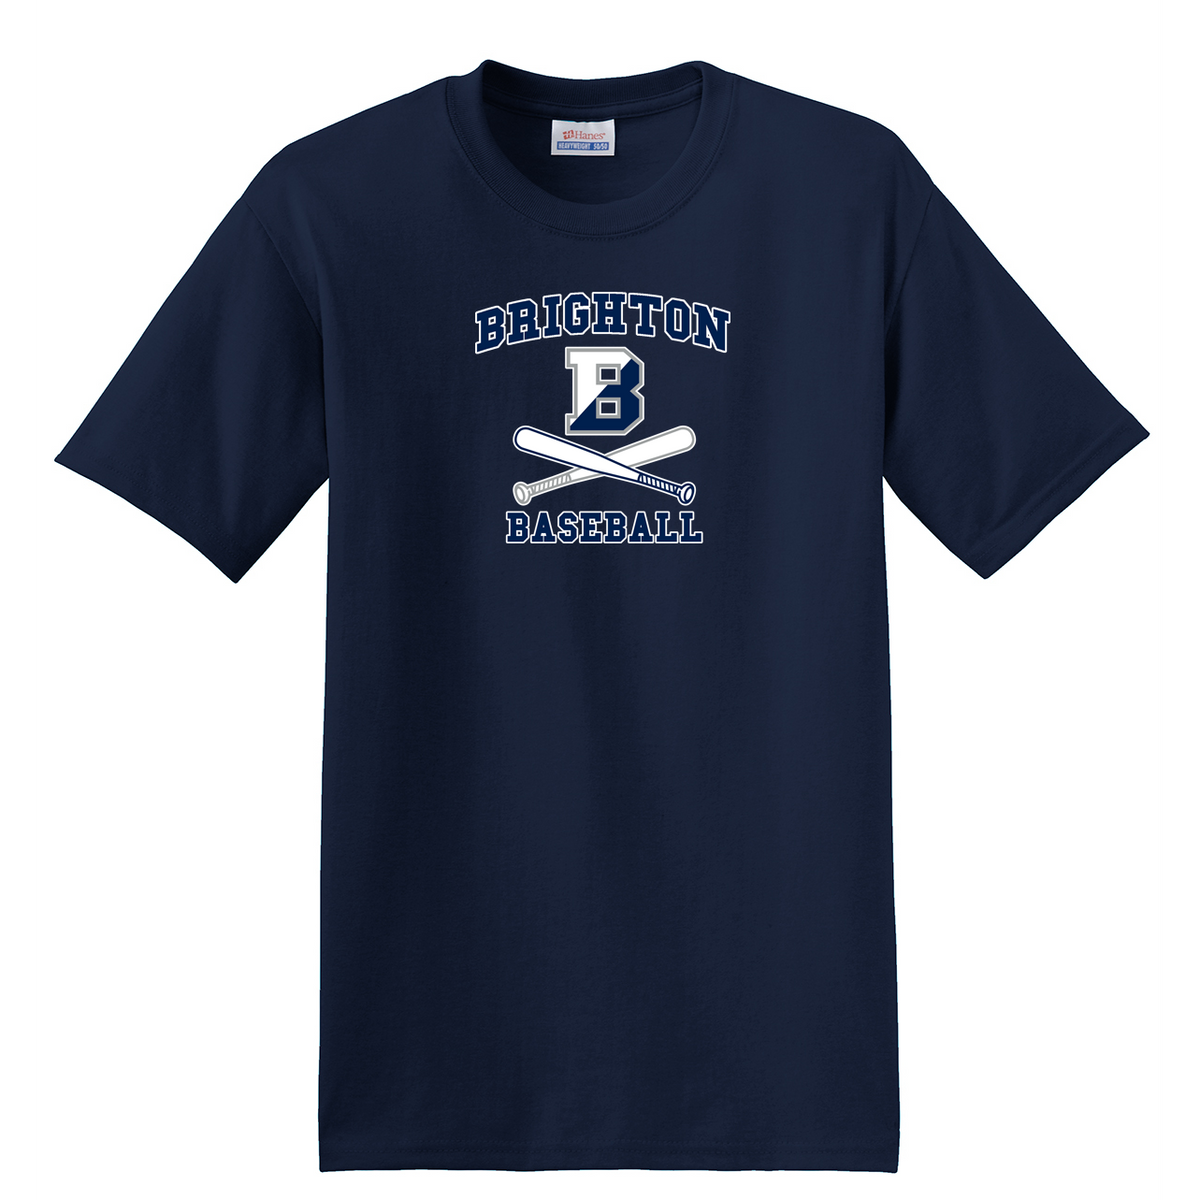 Brighton Baseball T-Shirt